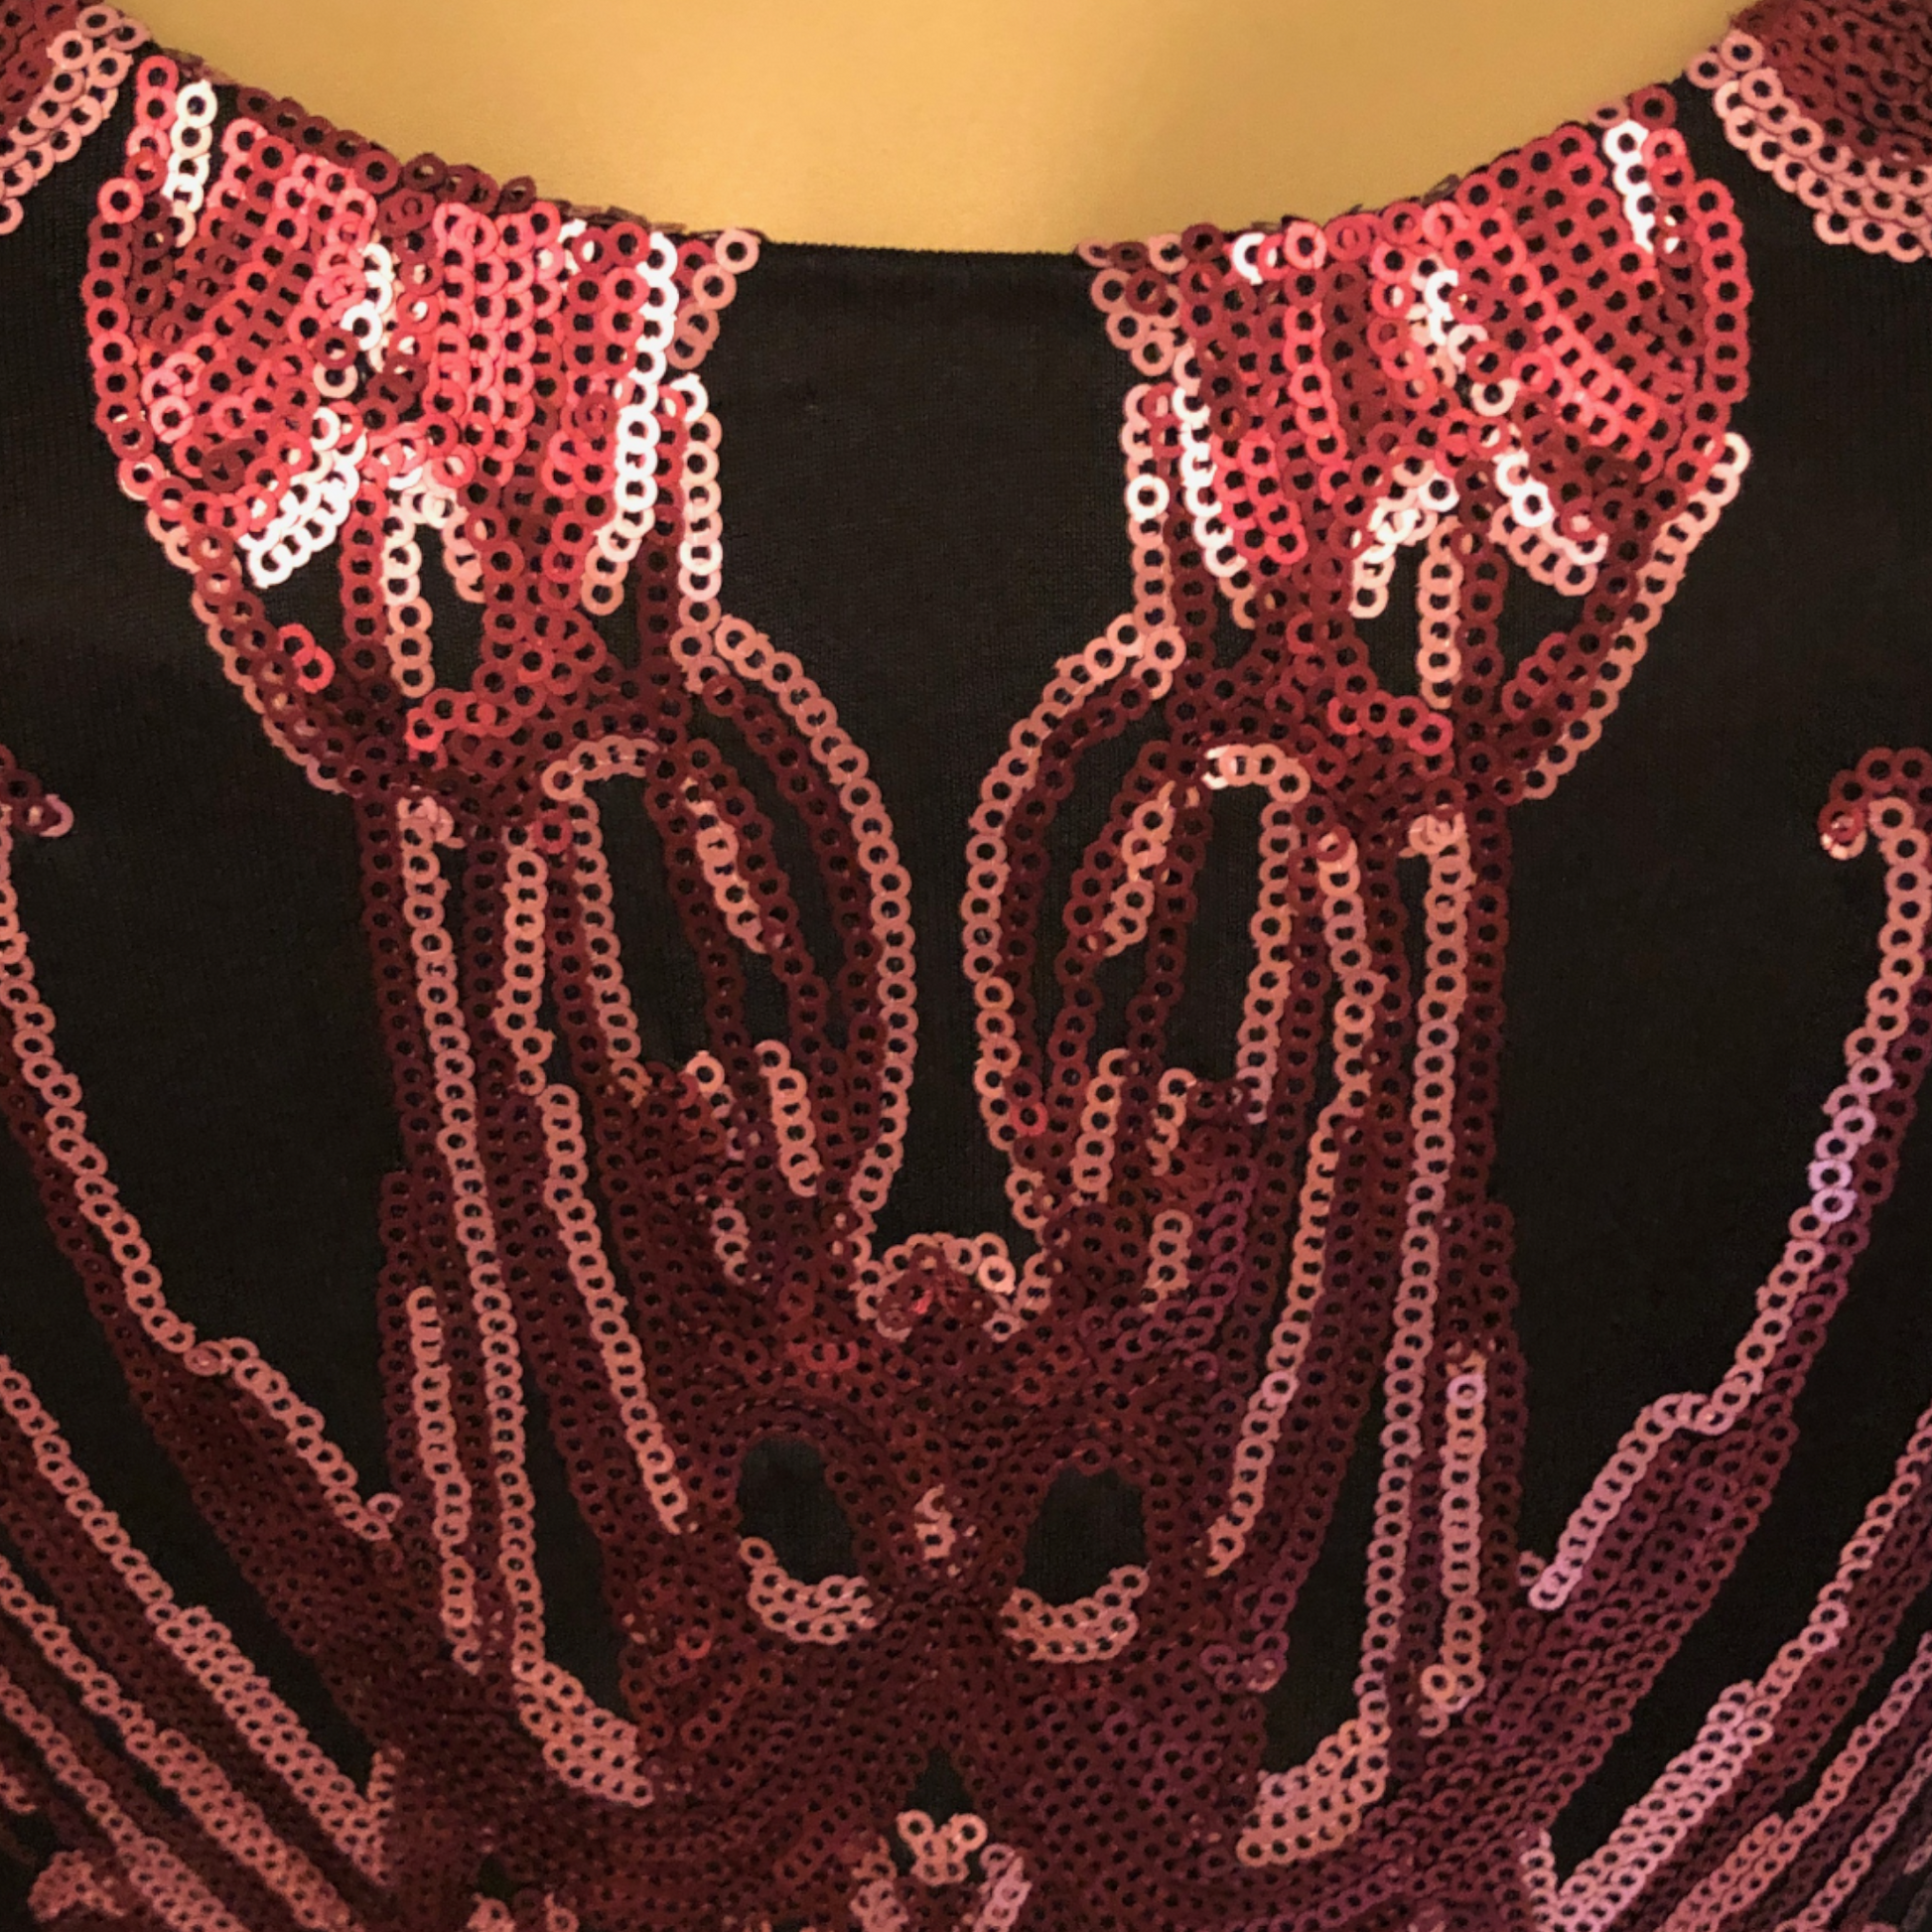 Michaela Louisa Black & Red Sequin Silhouette Dress UK 14 US 10 EU 42 Timeless Fashions